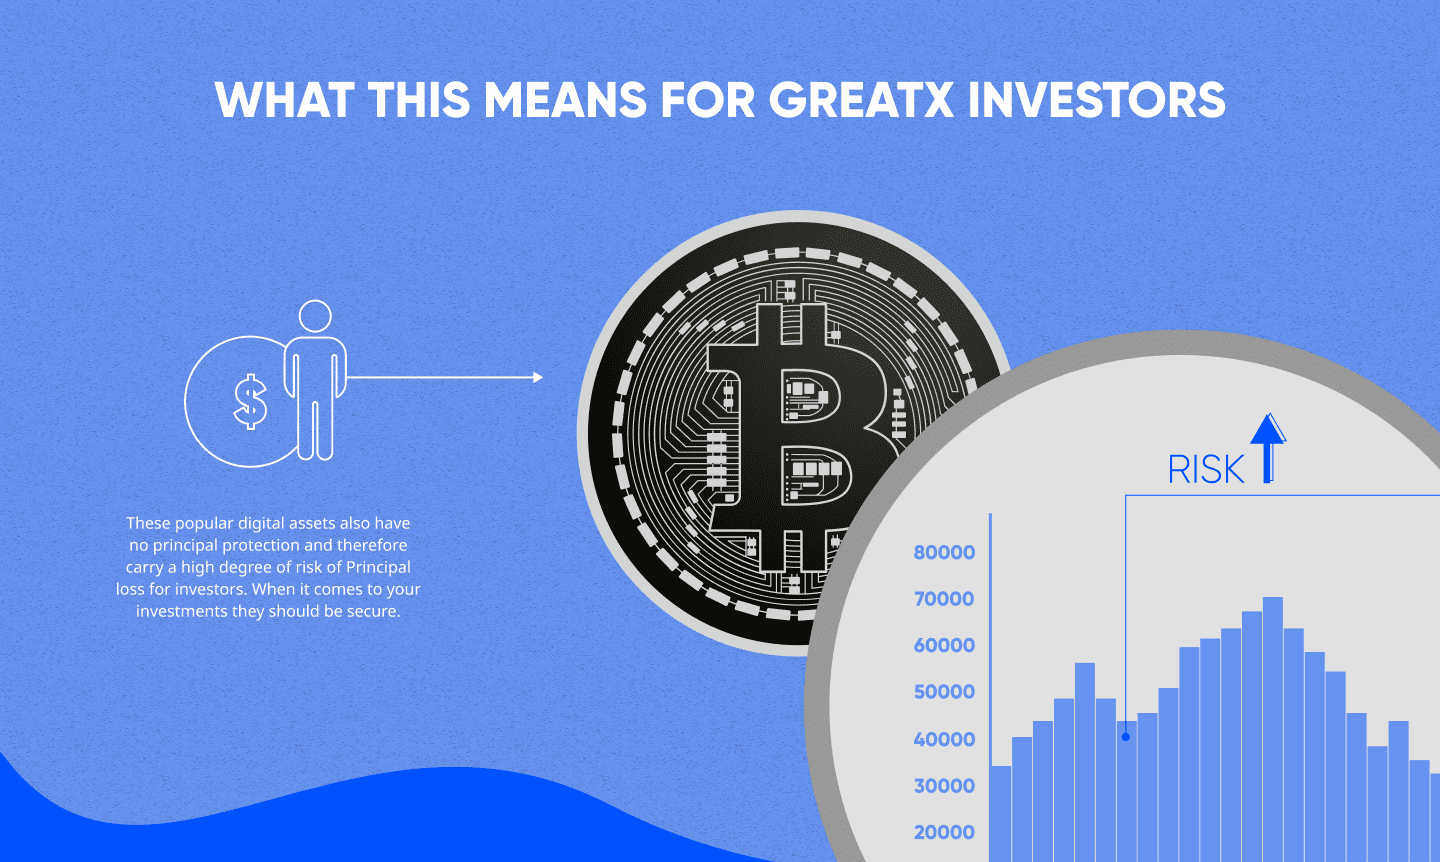 GreatX investors